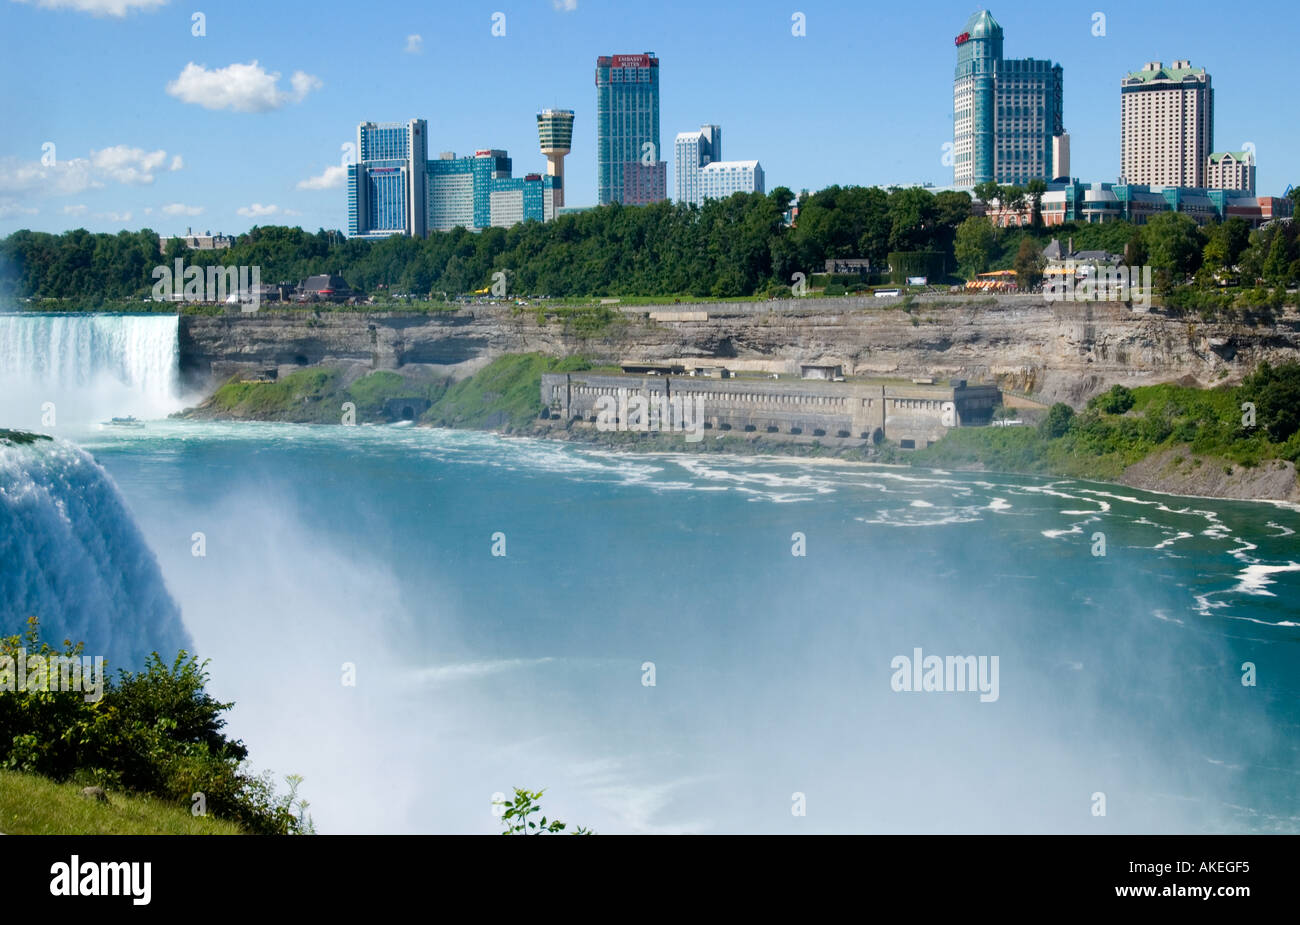 Stock Photo of  USA side of Niagara Falls Stock Photo